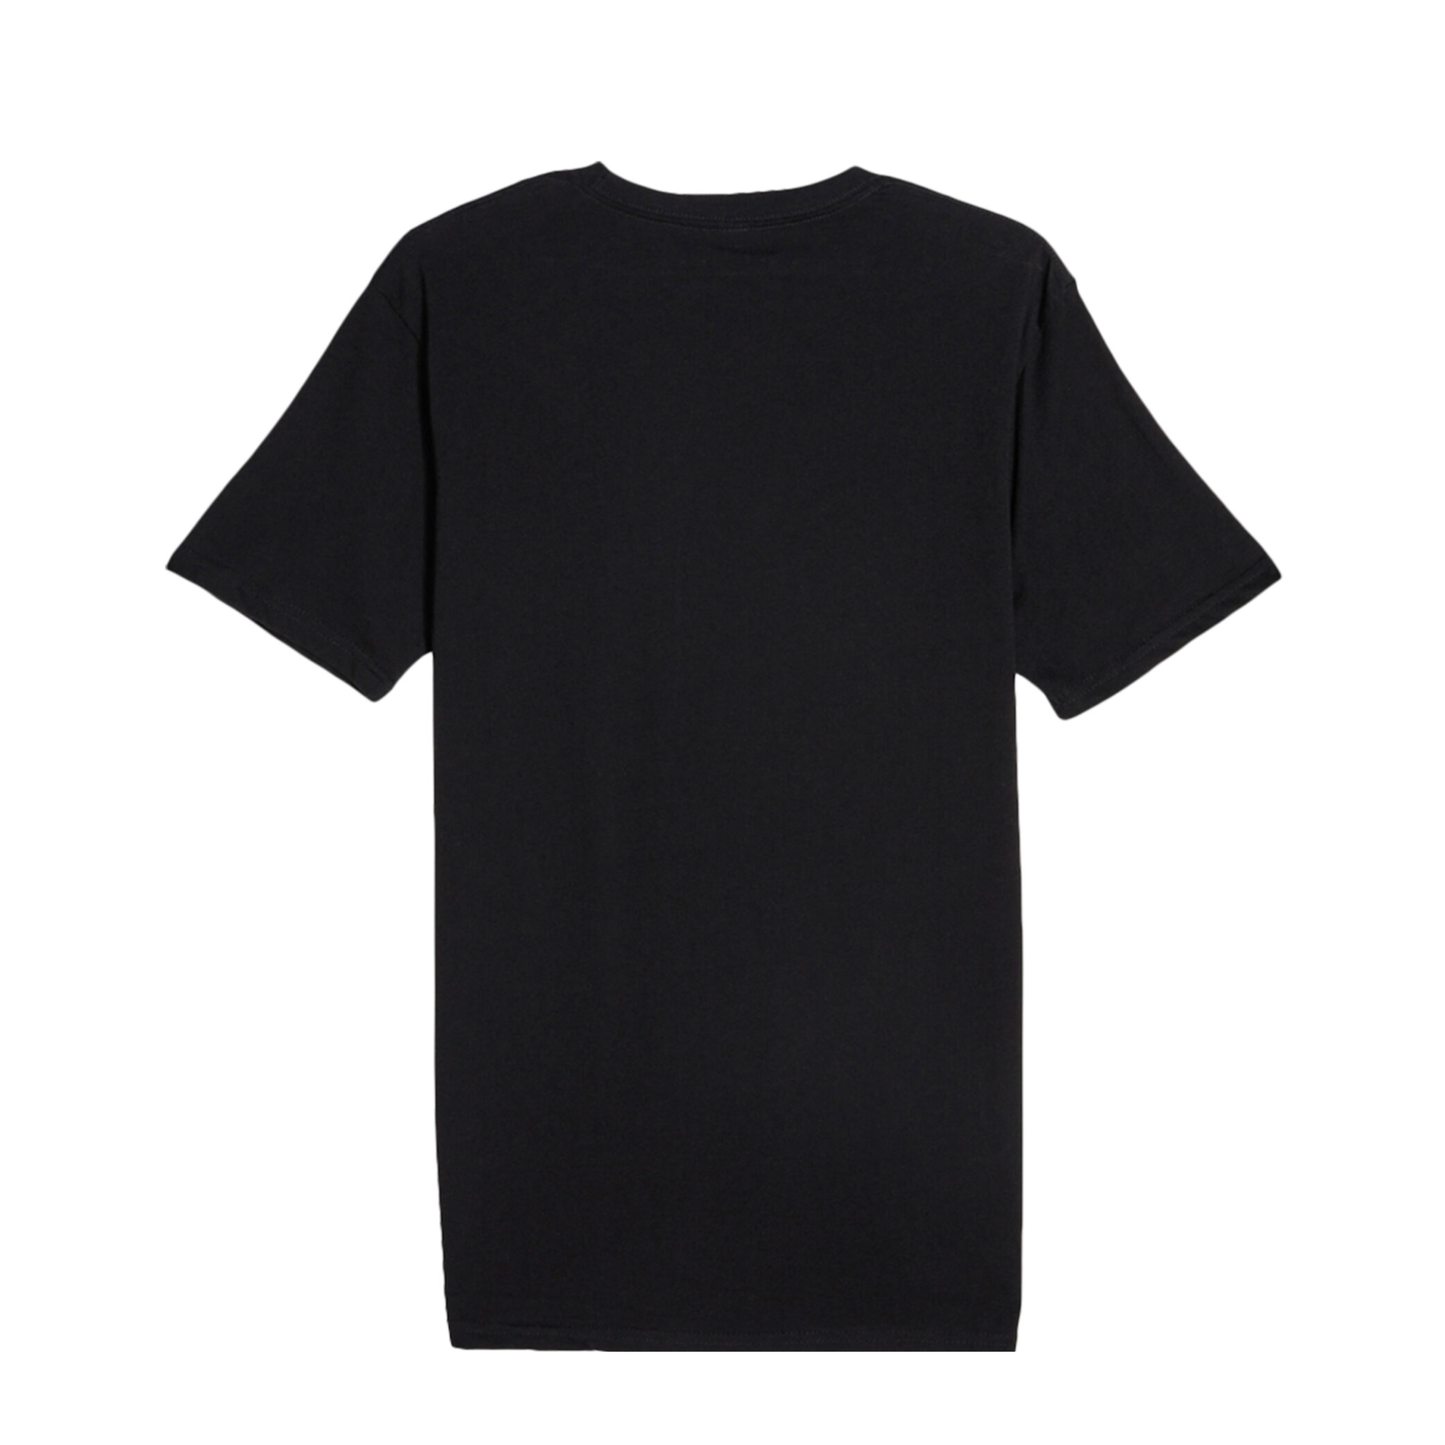 Principle Layers -- Unisex Premium T-Shirt